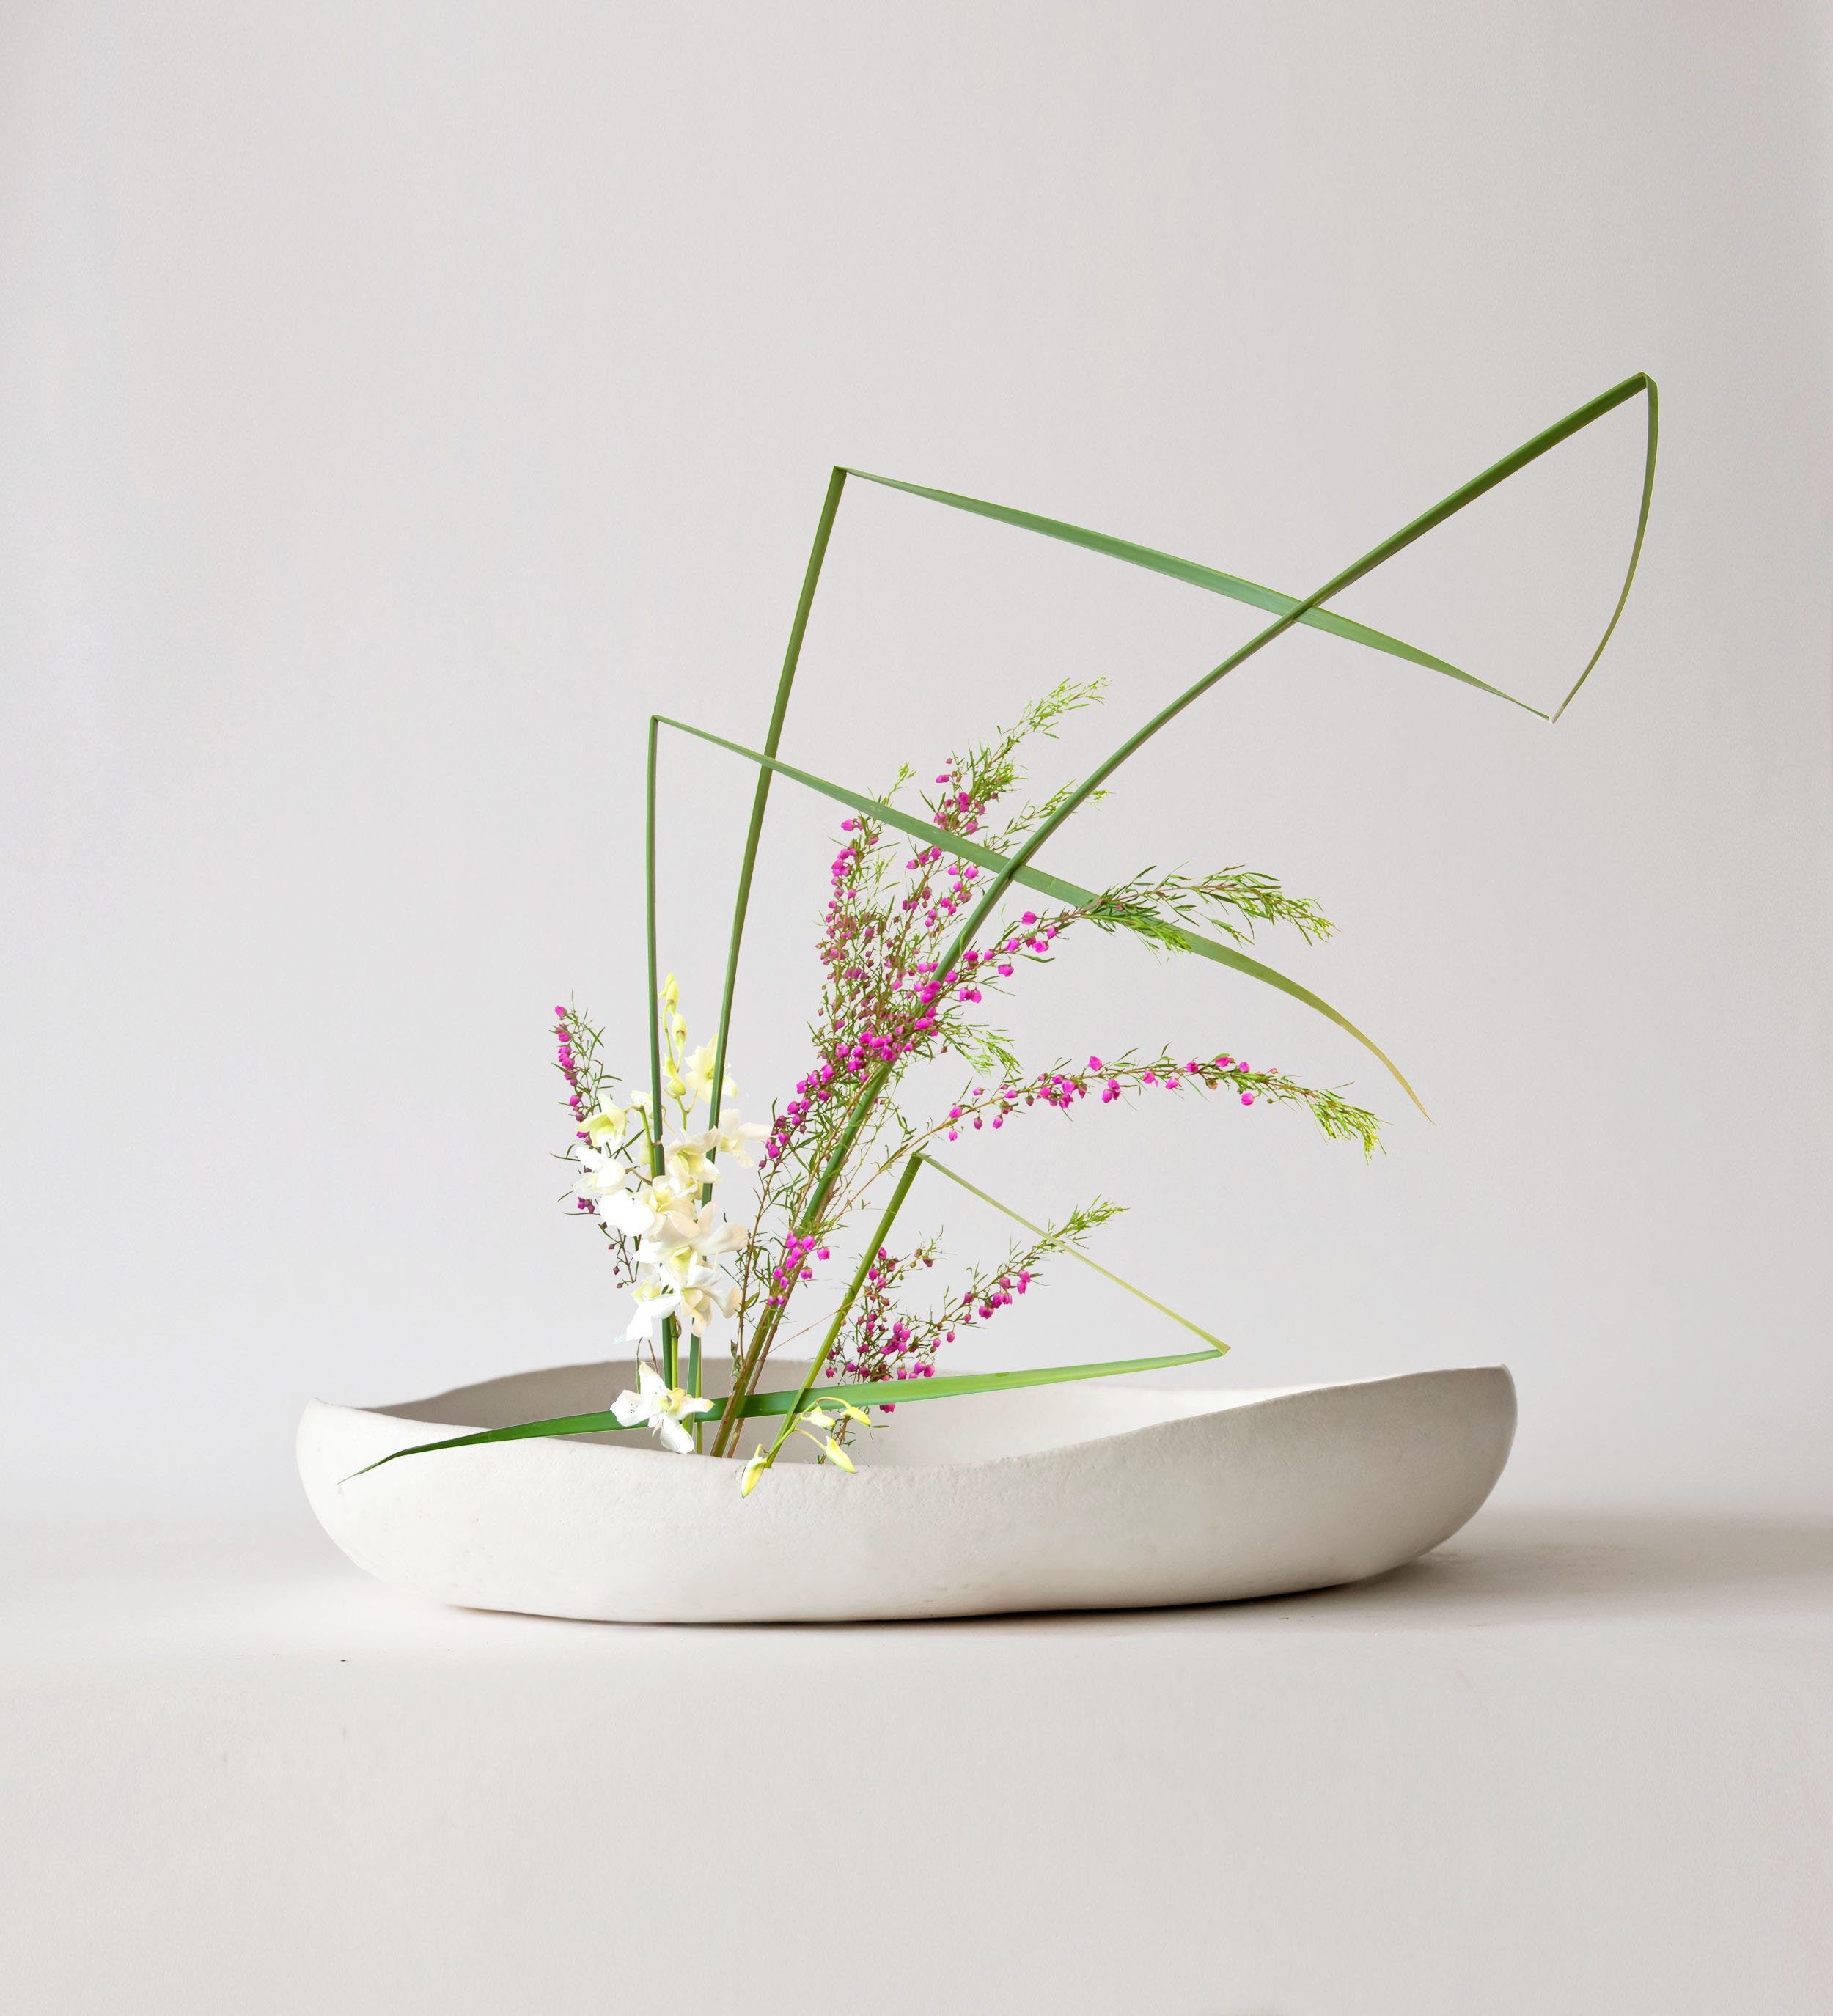  Japanese Ceramic Ikebana Flower Vase Flower Arranging  Supplies,Flower Arrangement Container for Ikebana Vase & Flower Frog A11 :  Arts, Crafts & Sewing